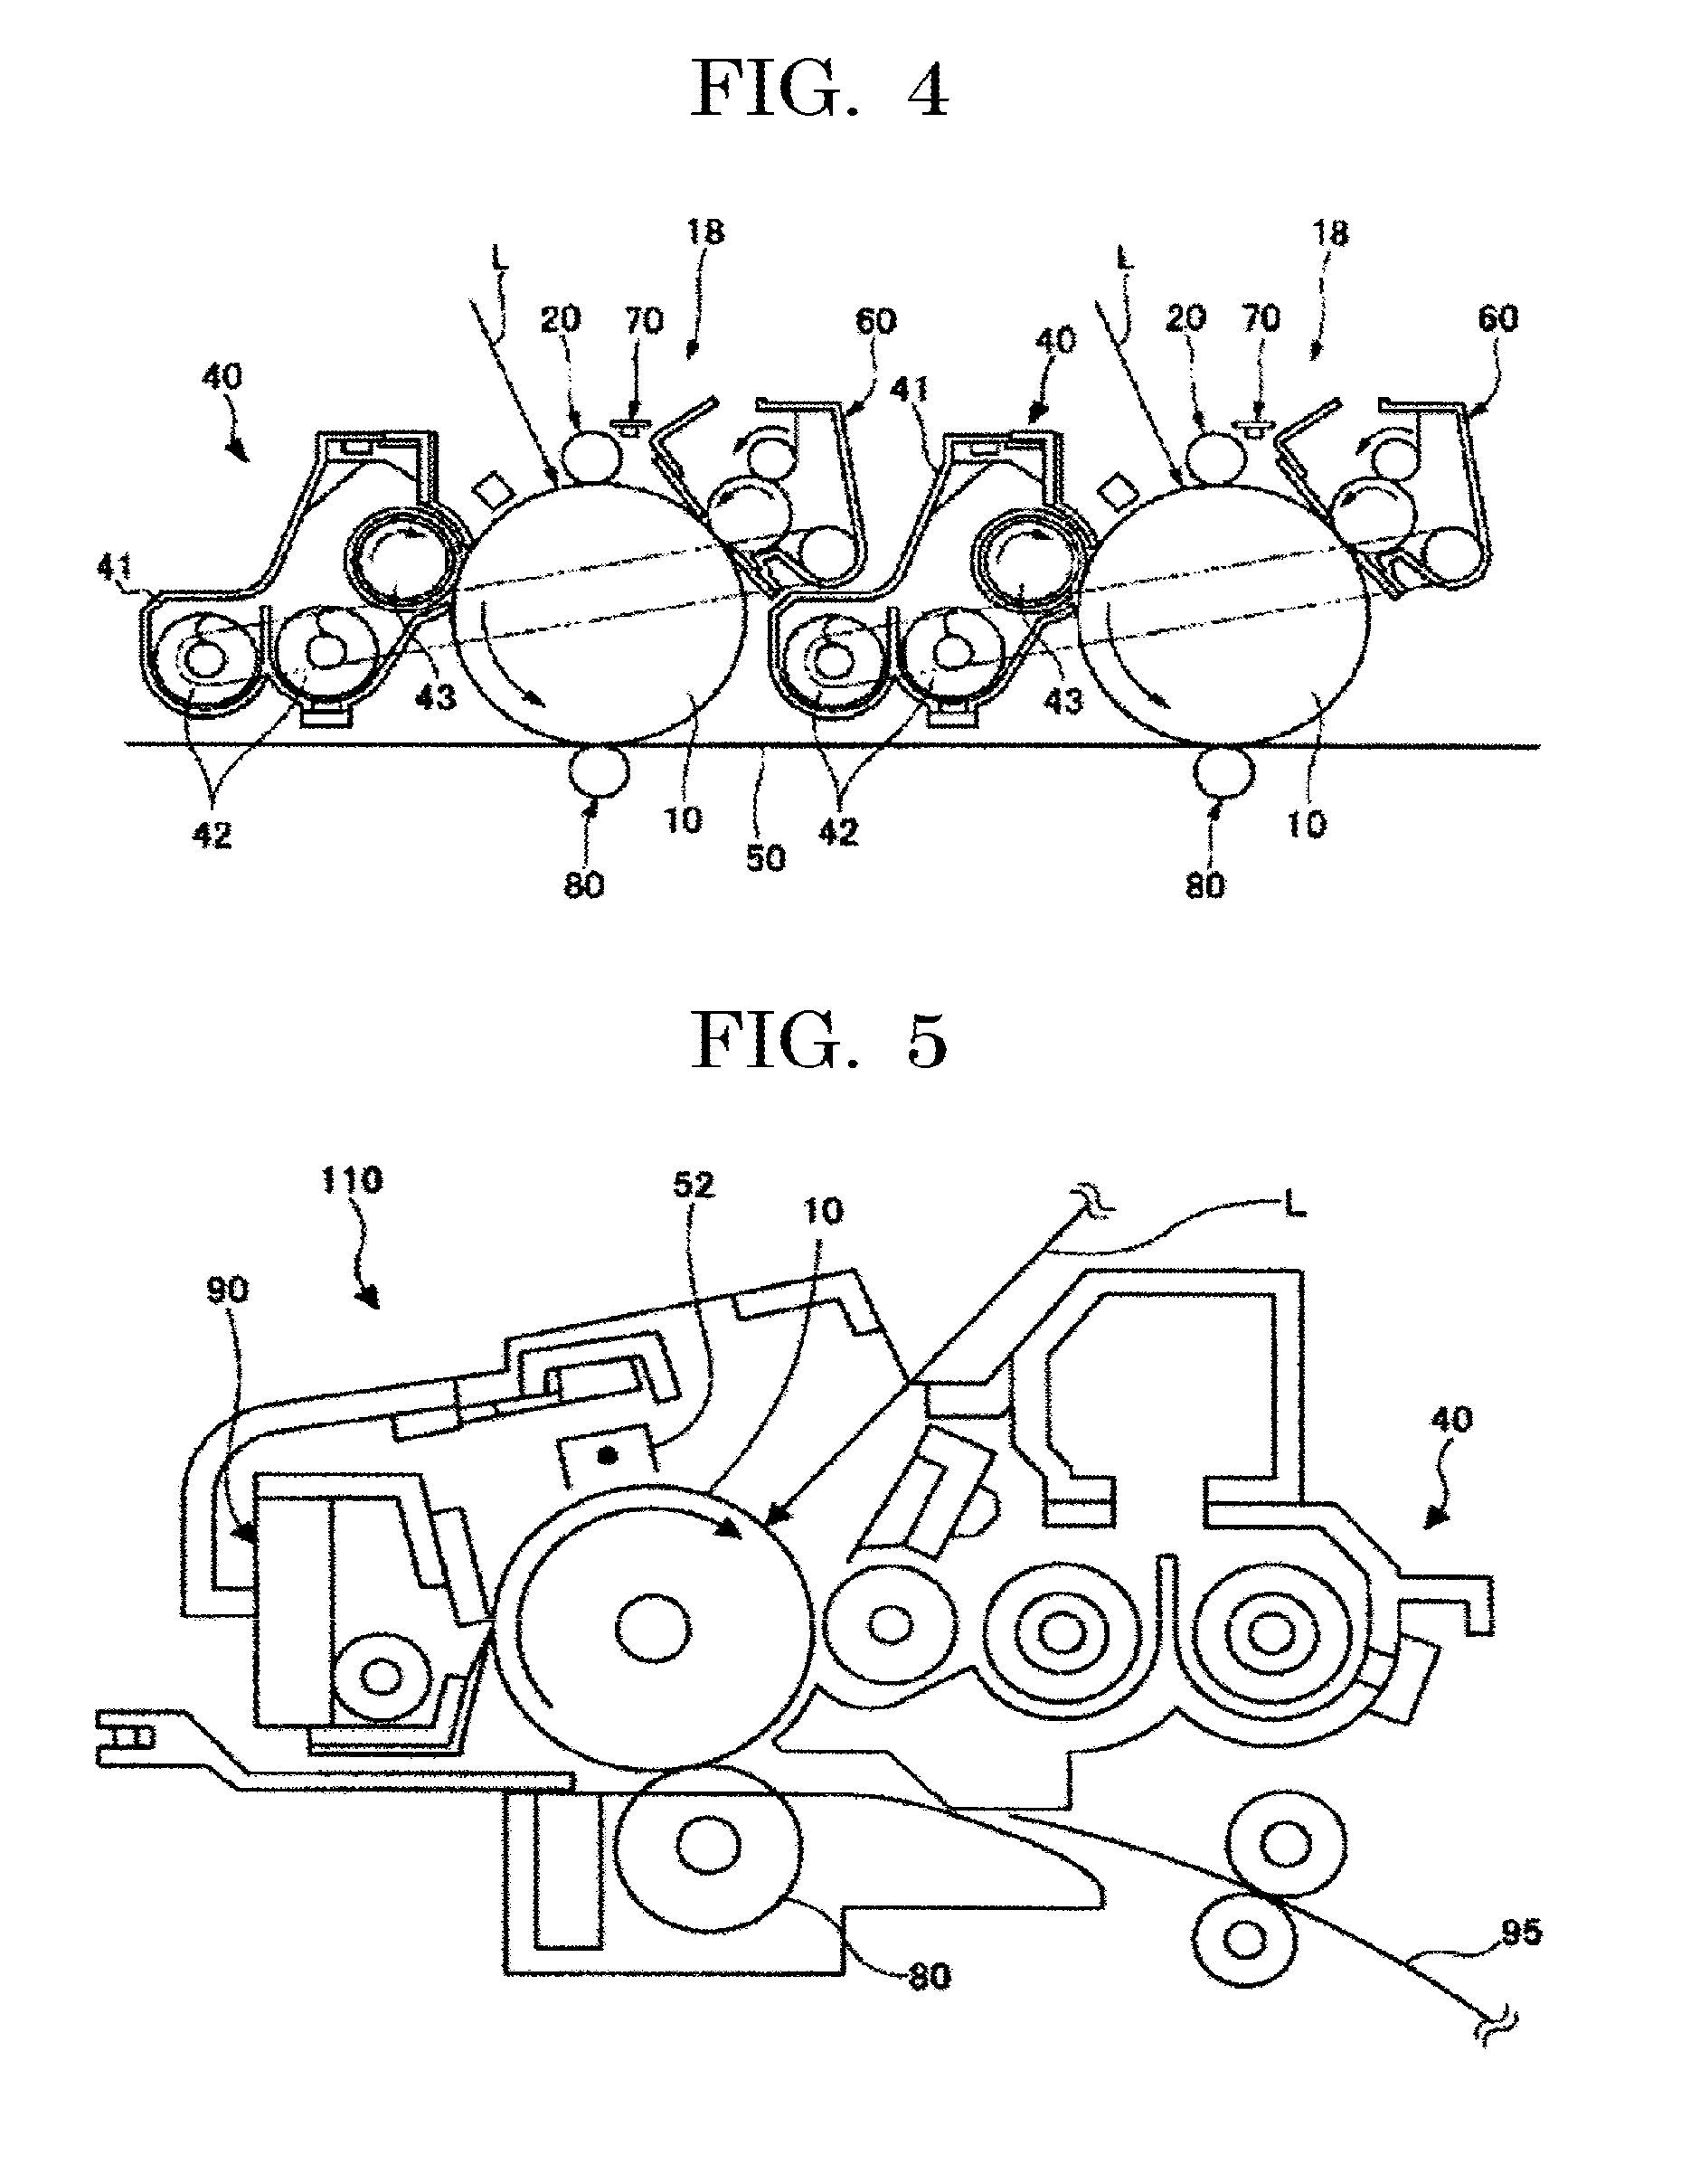 Toner, image forming apparatus, and process cartridge